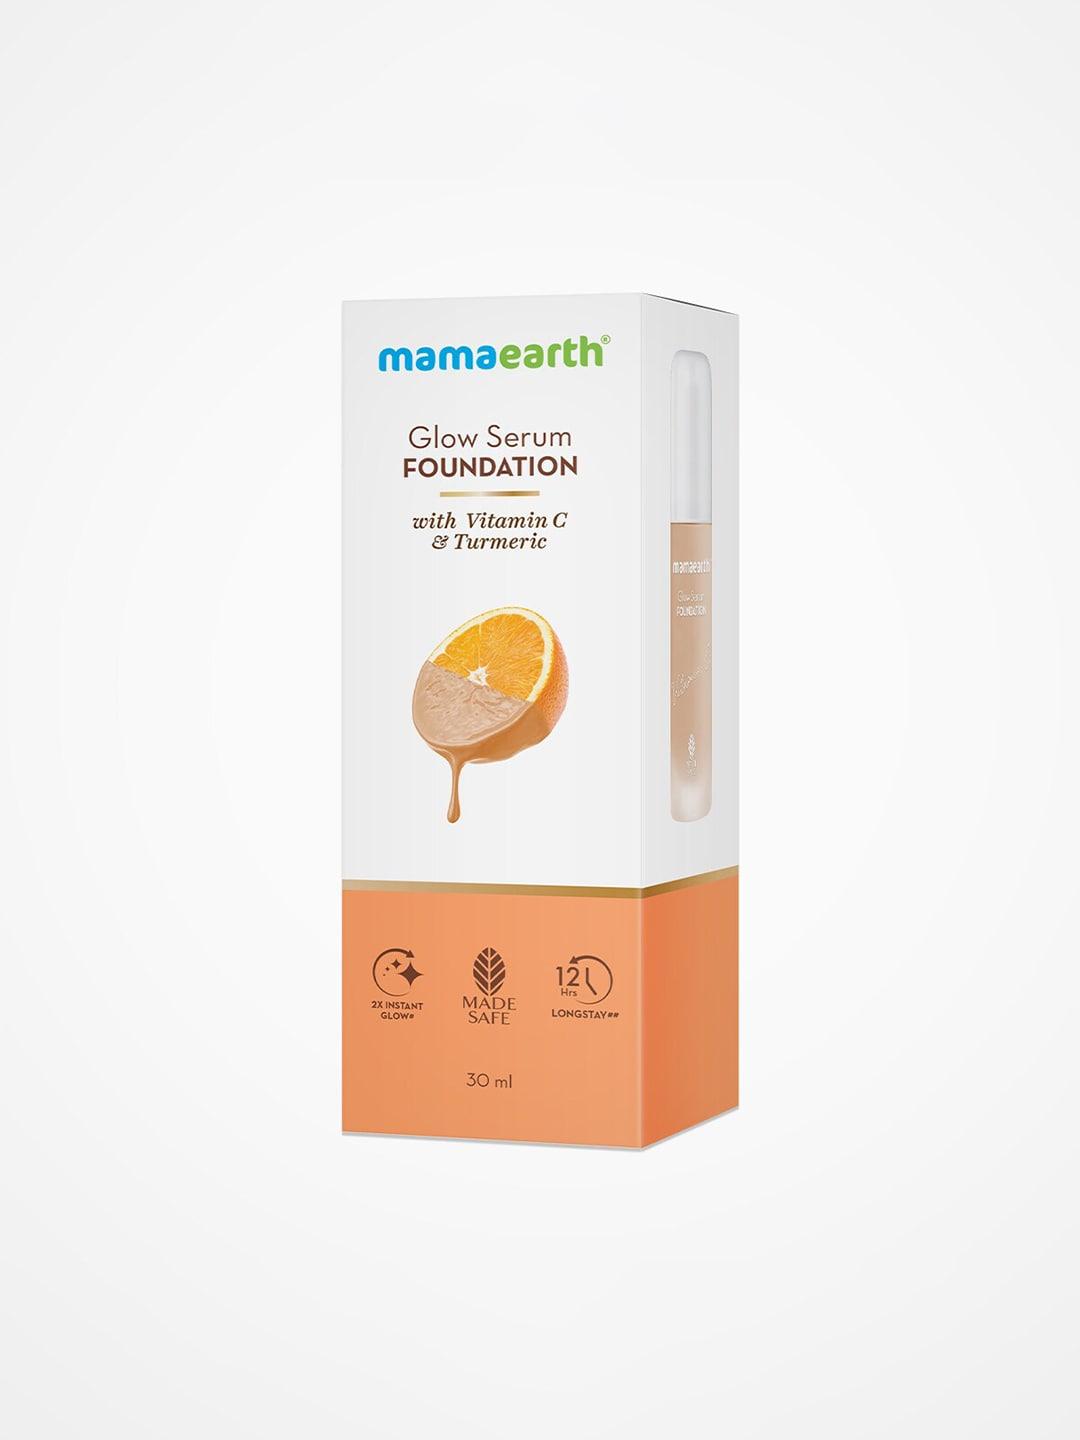 mamaearth glow serum foundation with vitamin c & turmeric 30 ml - crme glow 02